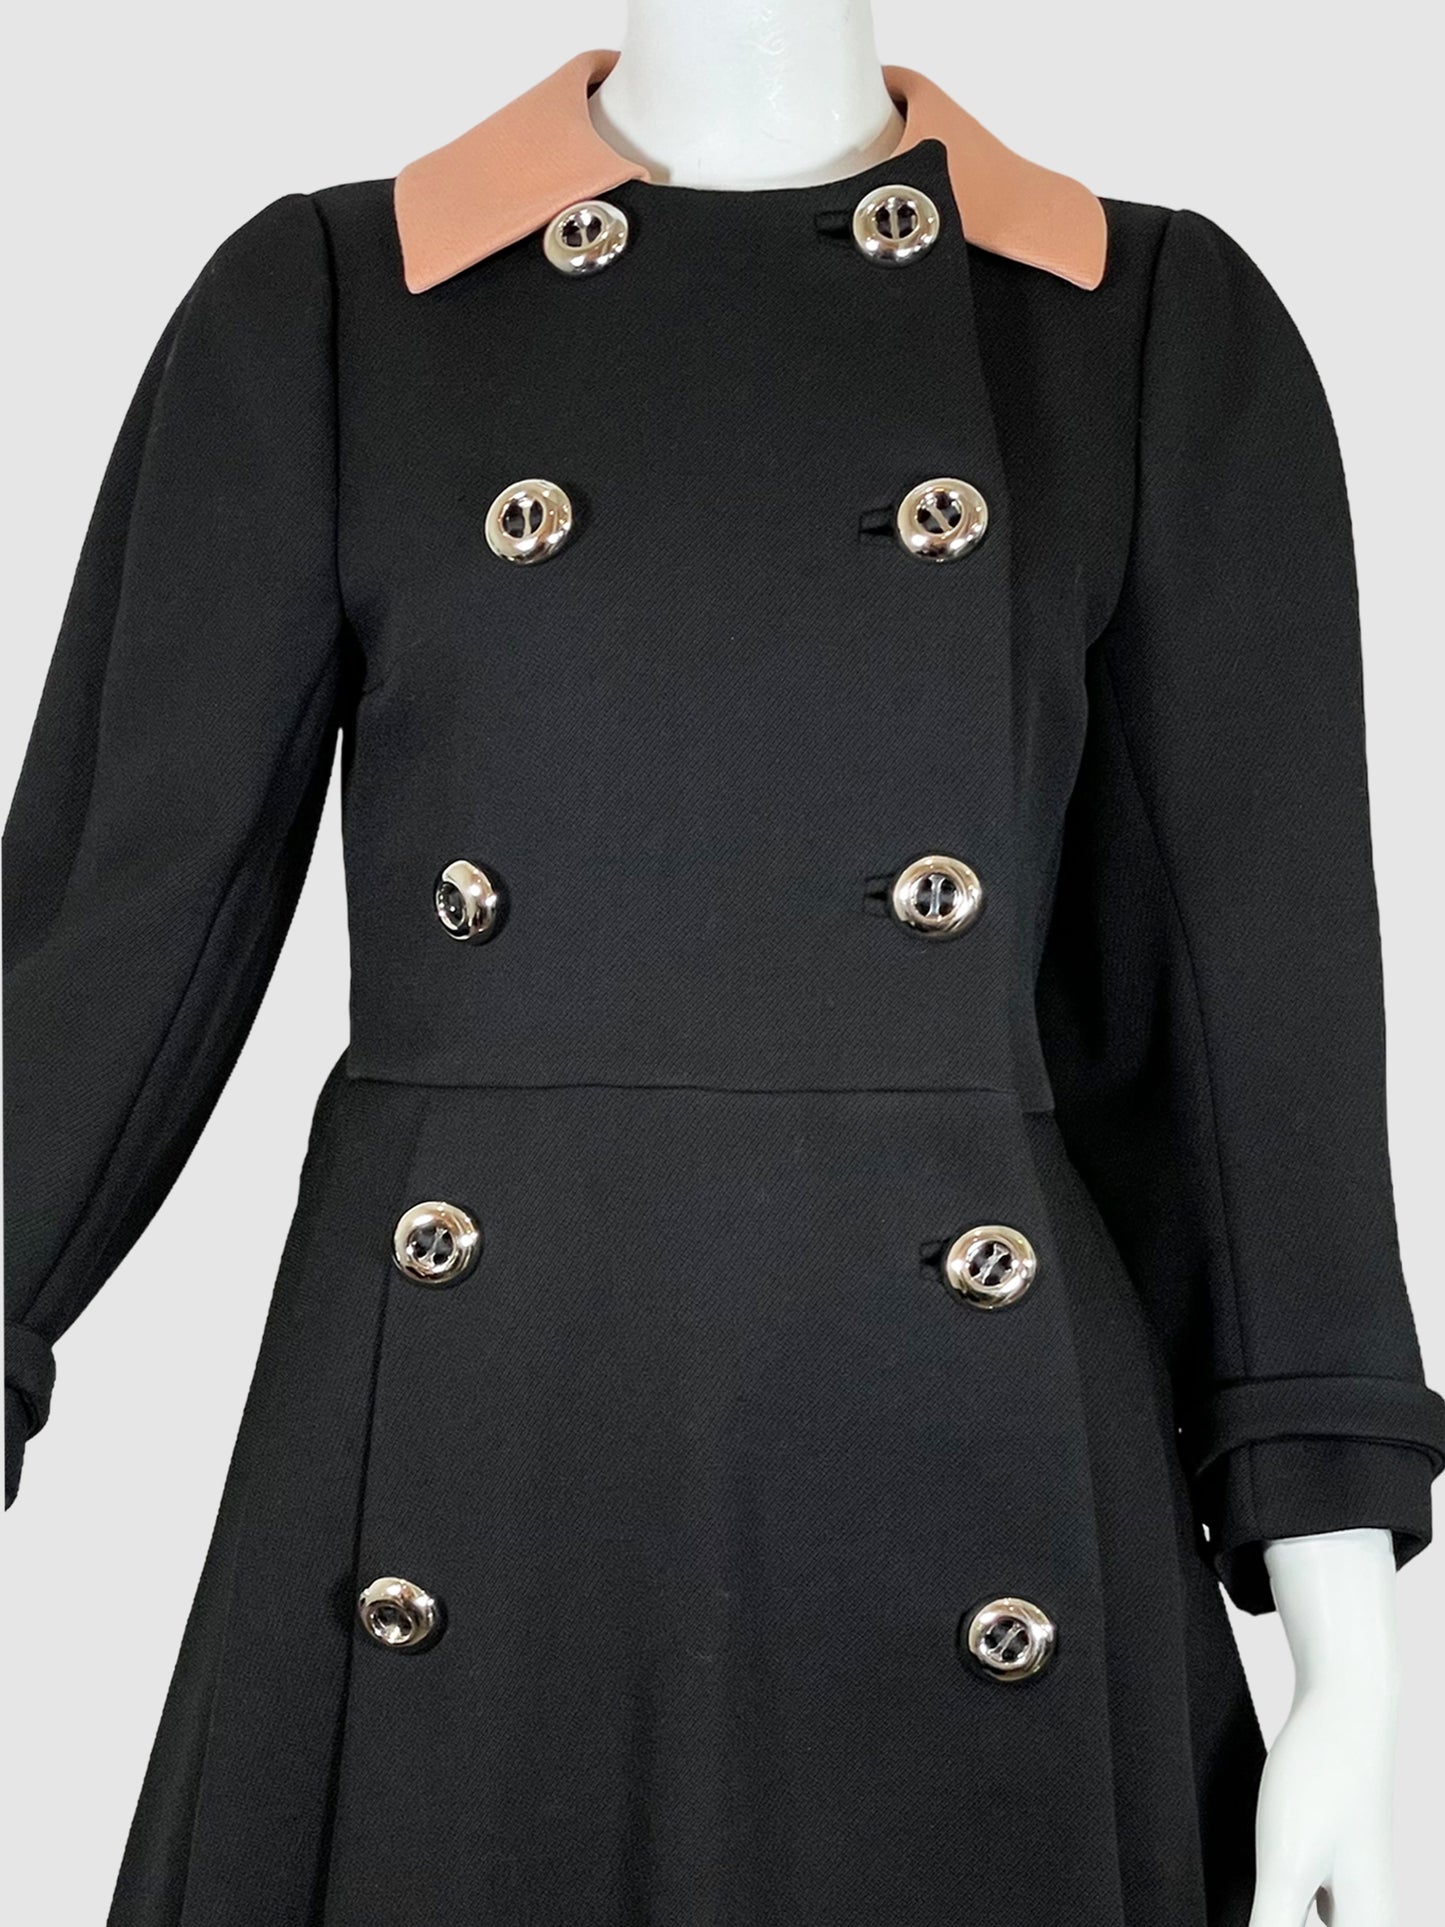 Prada Wool Double-Breasted Coat - Size 40